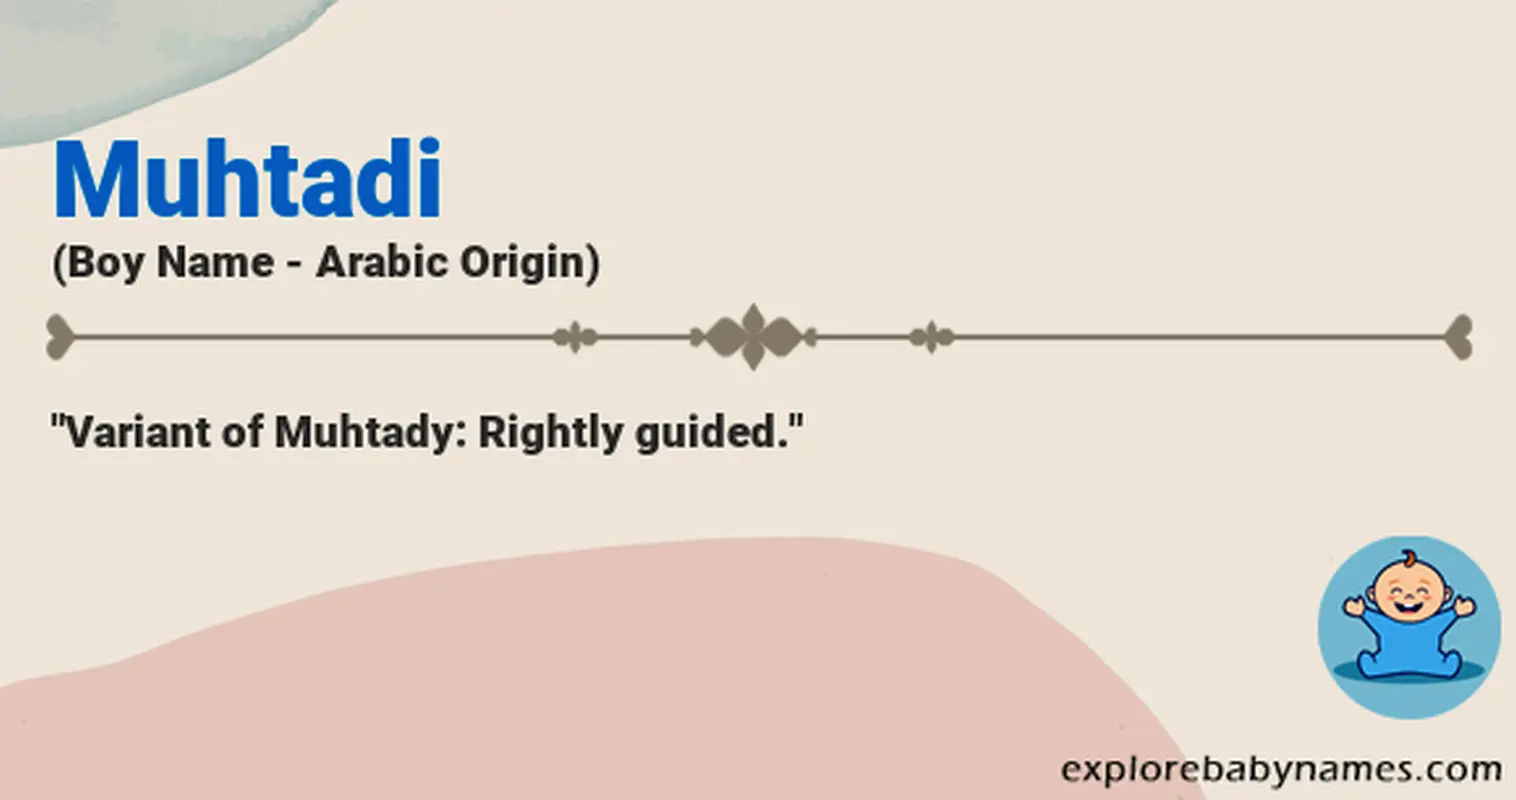 Meaning of Muhtadi